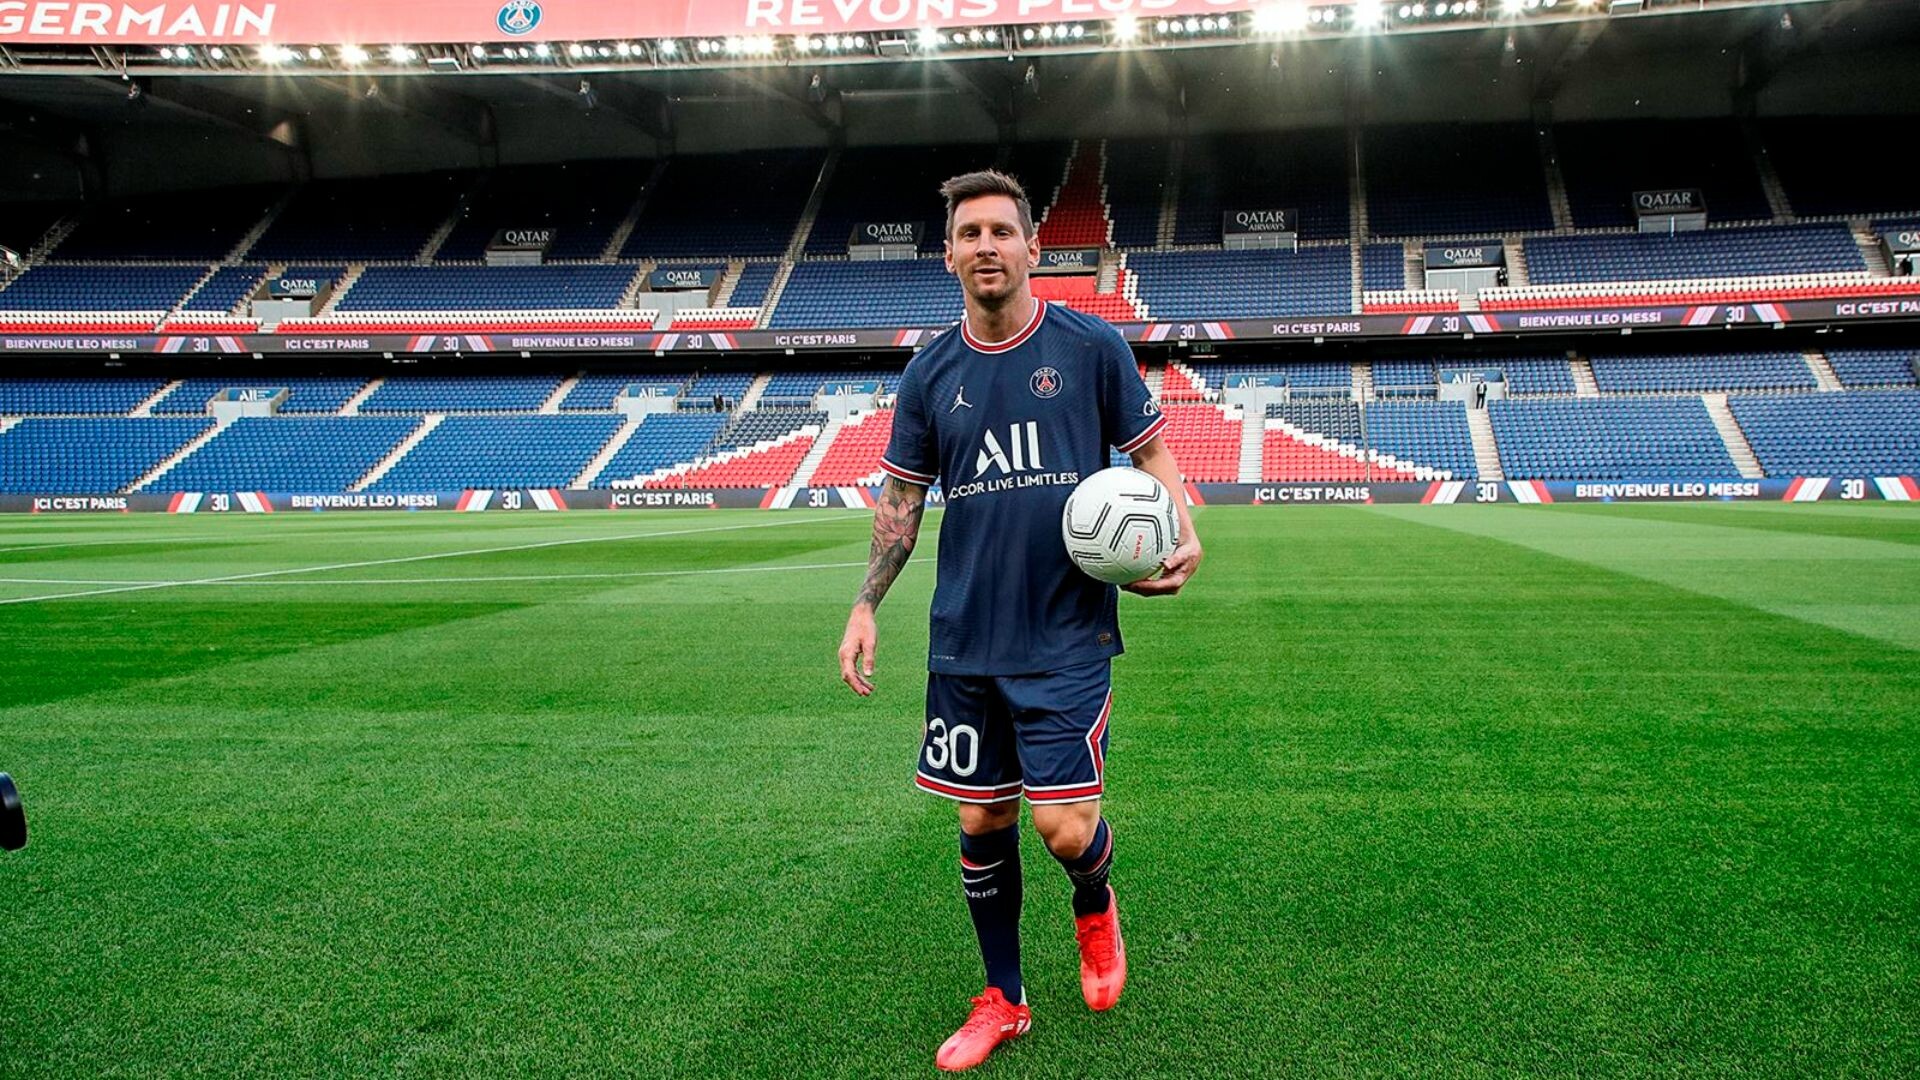 Lionel Messi: PSG, He signed for Paris Saint-Germain in August 2021, Stade de France. 1920x1080 Full HD Wallpaper.